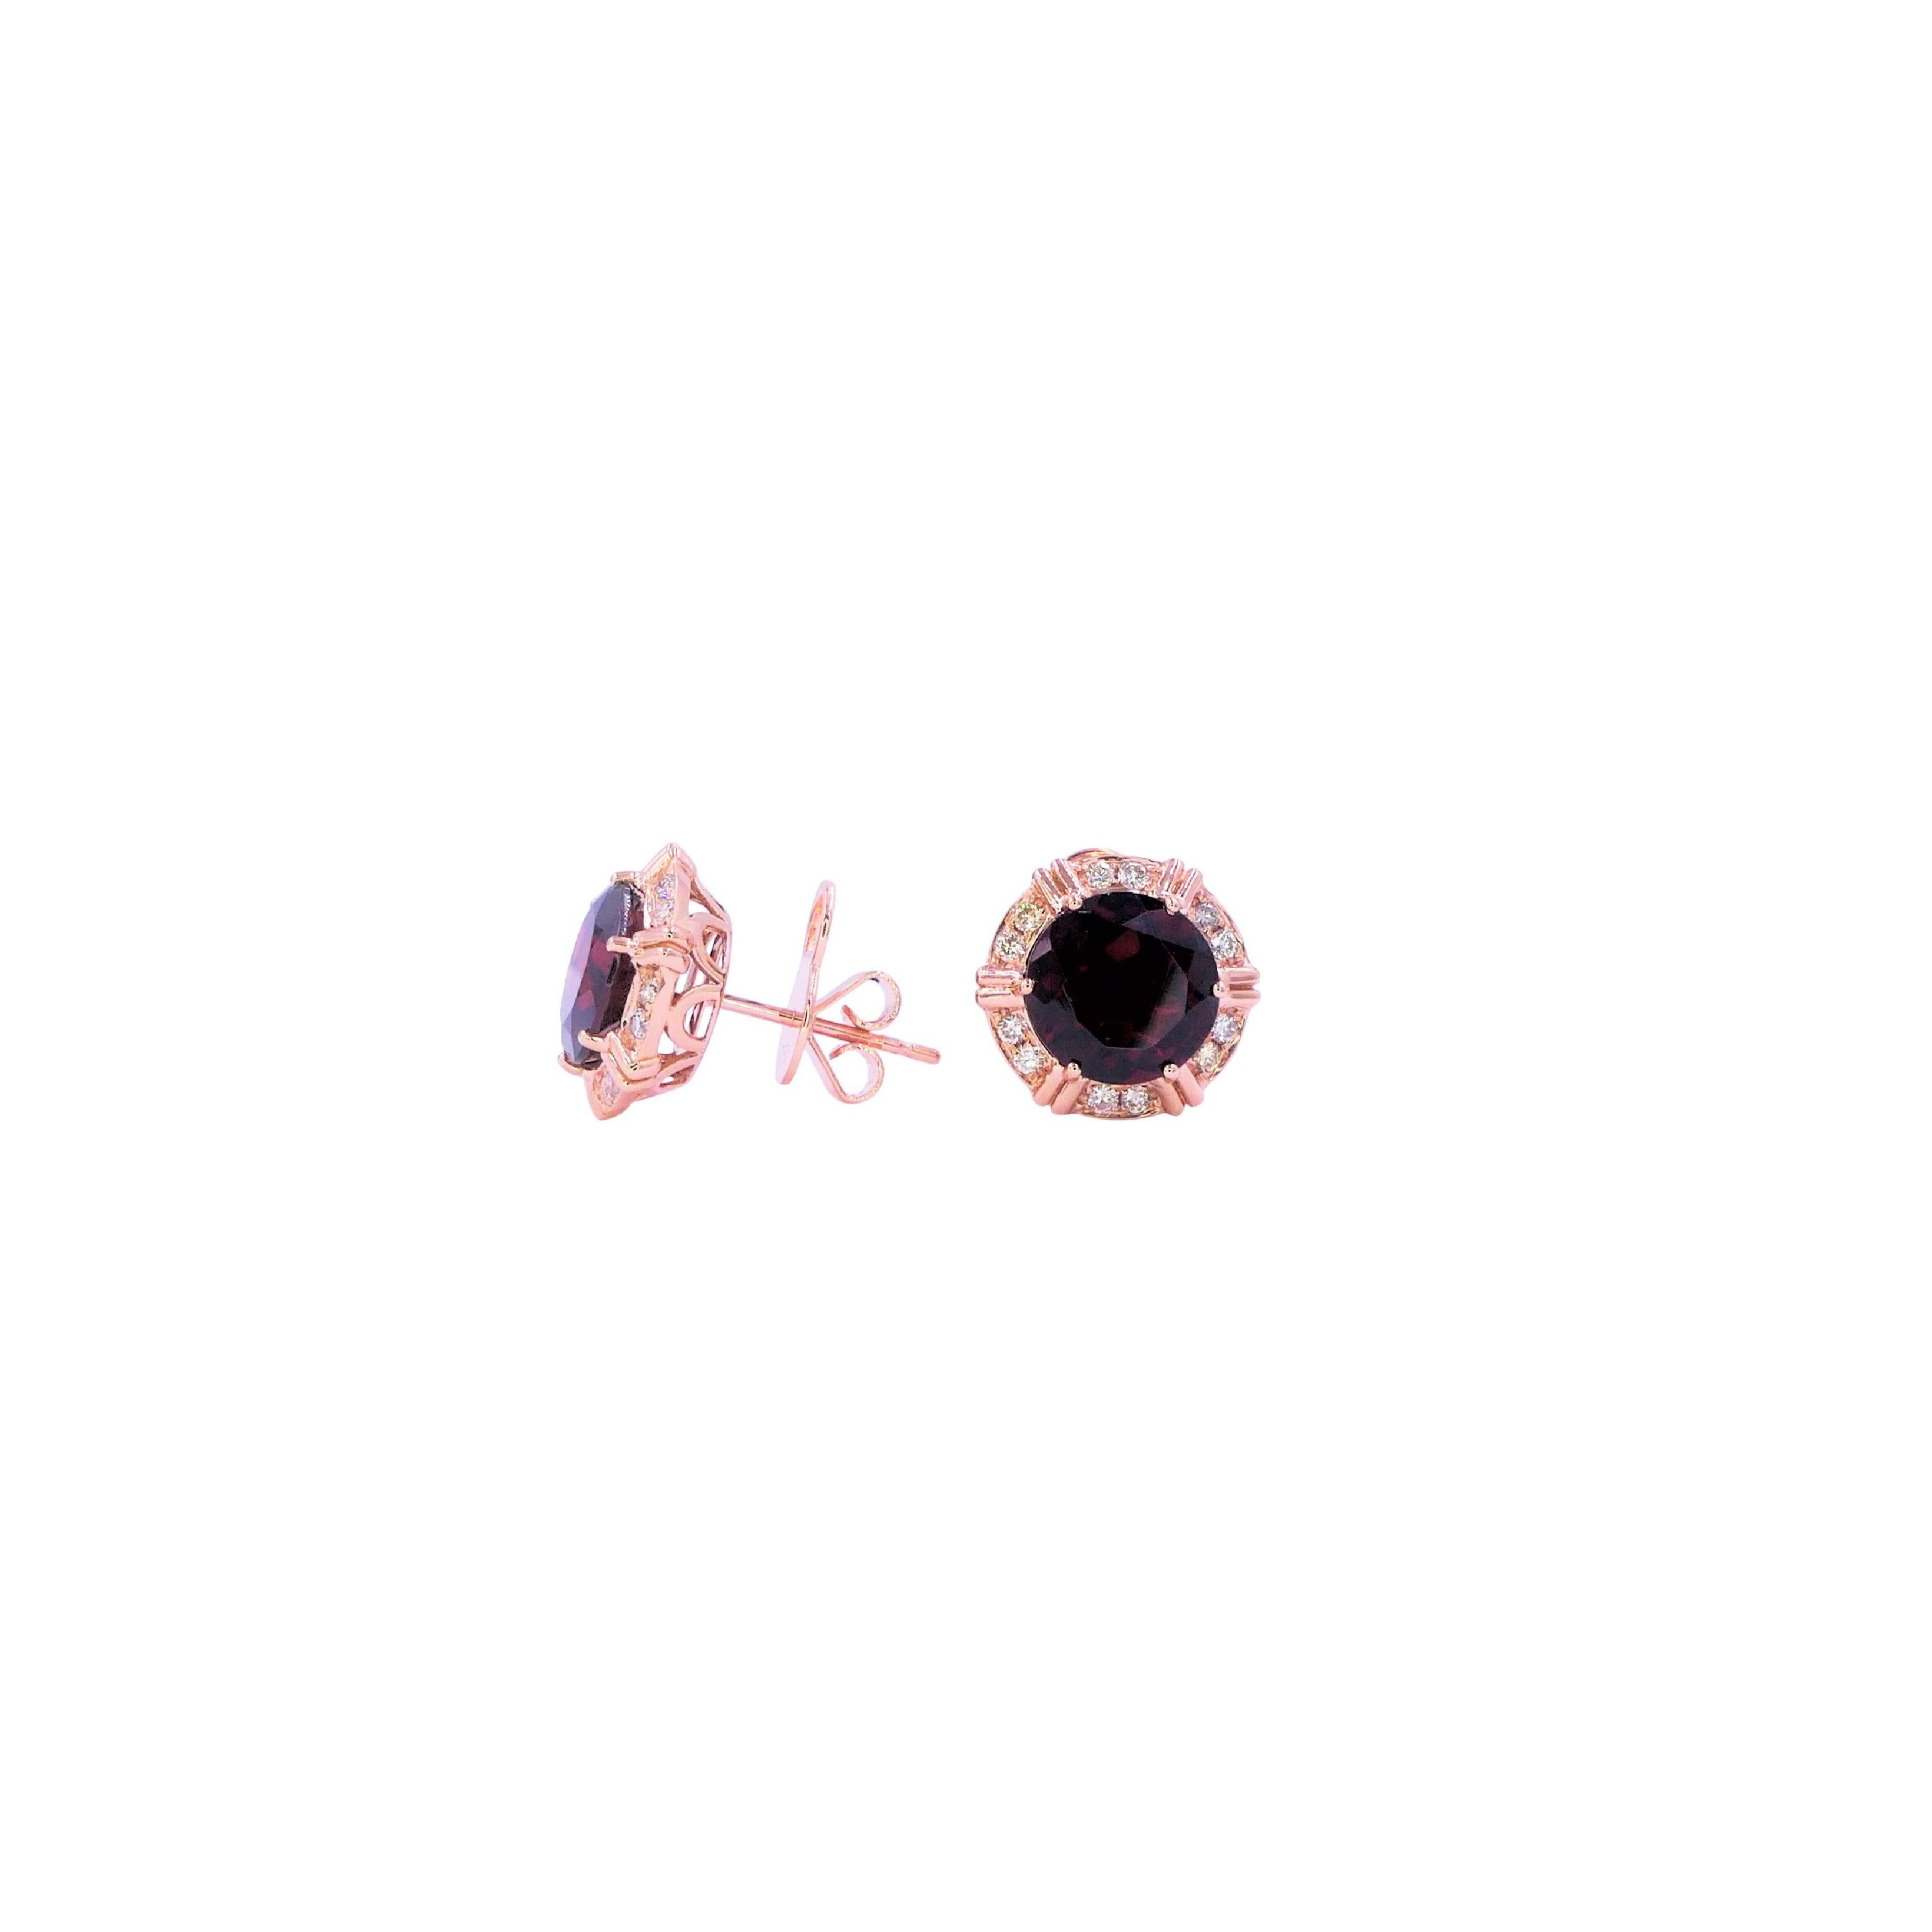 18 Karat Rose Gold
6.12 CT Round Cut Garnets
0.32 CT Diamond of G Color, SI1 Clarity
